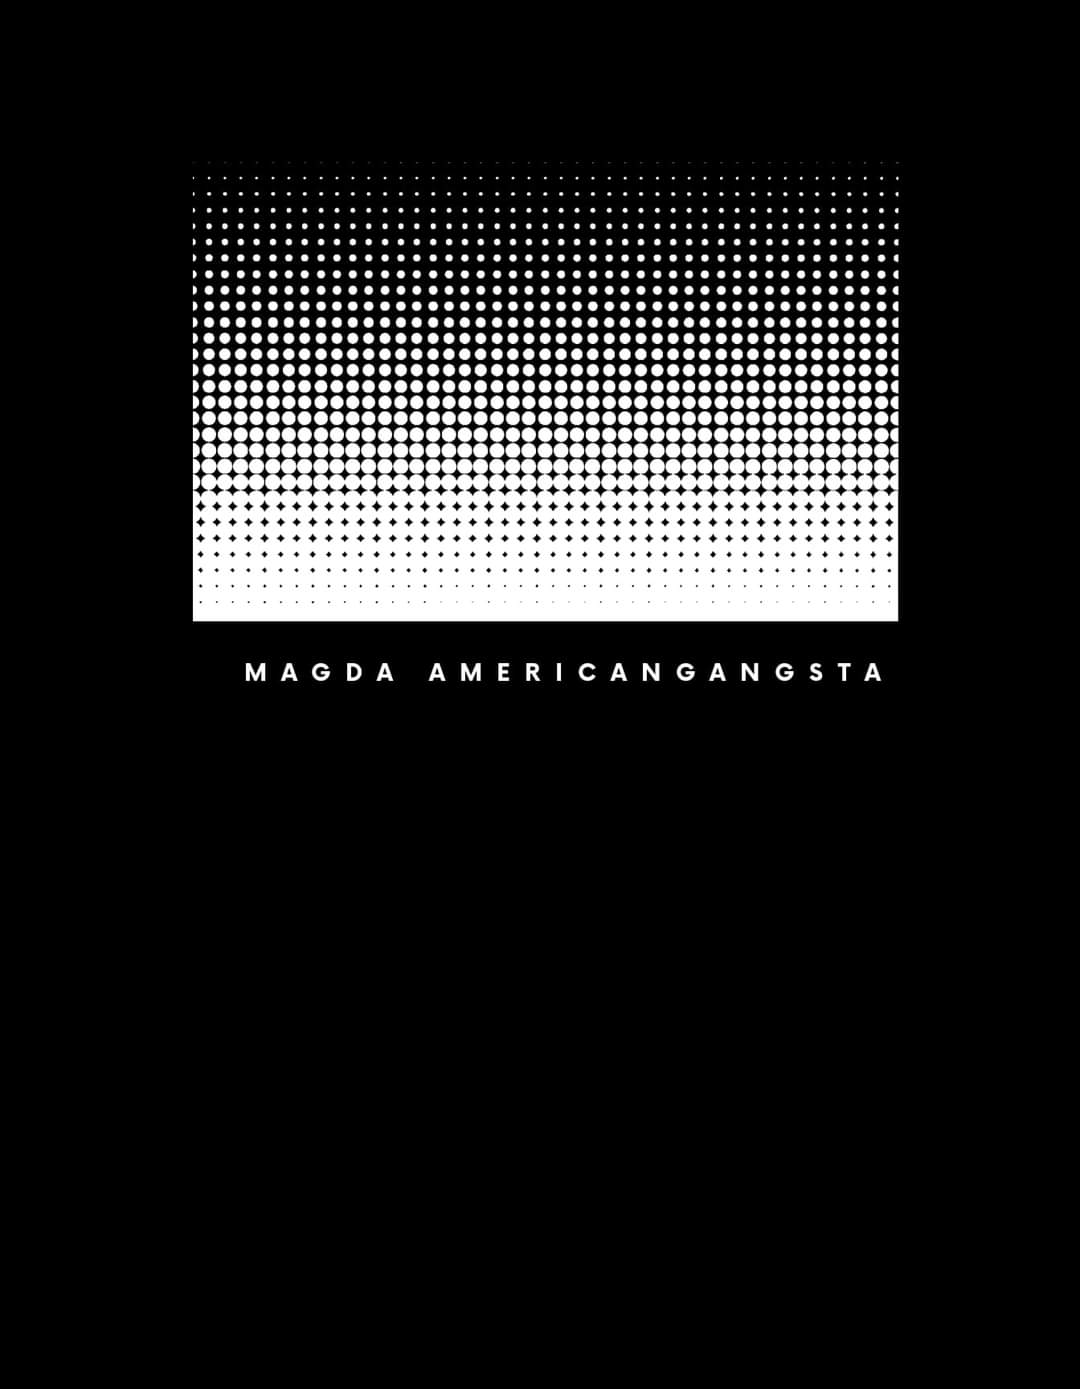 Magda_Americangangsta banner